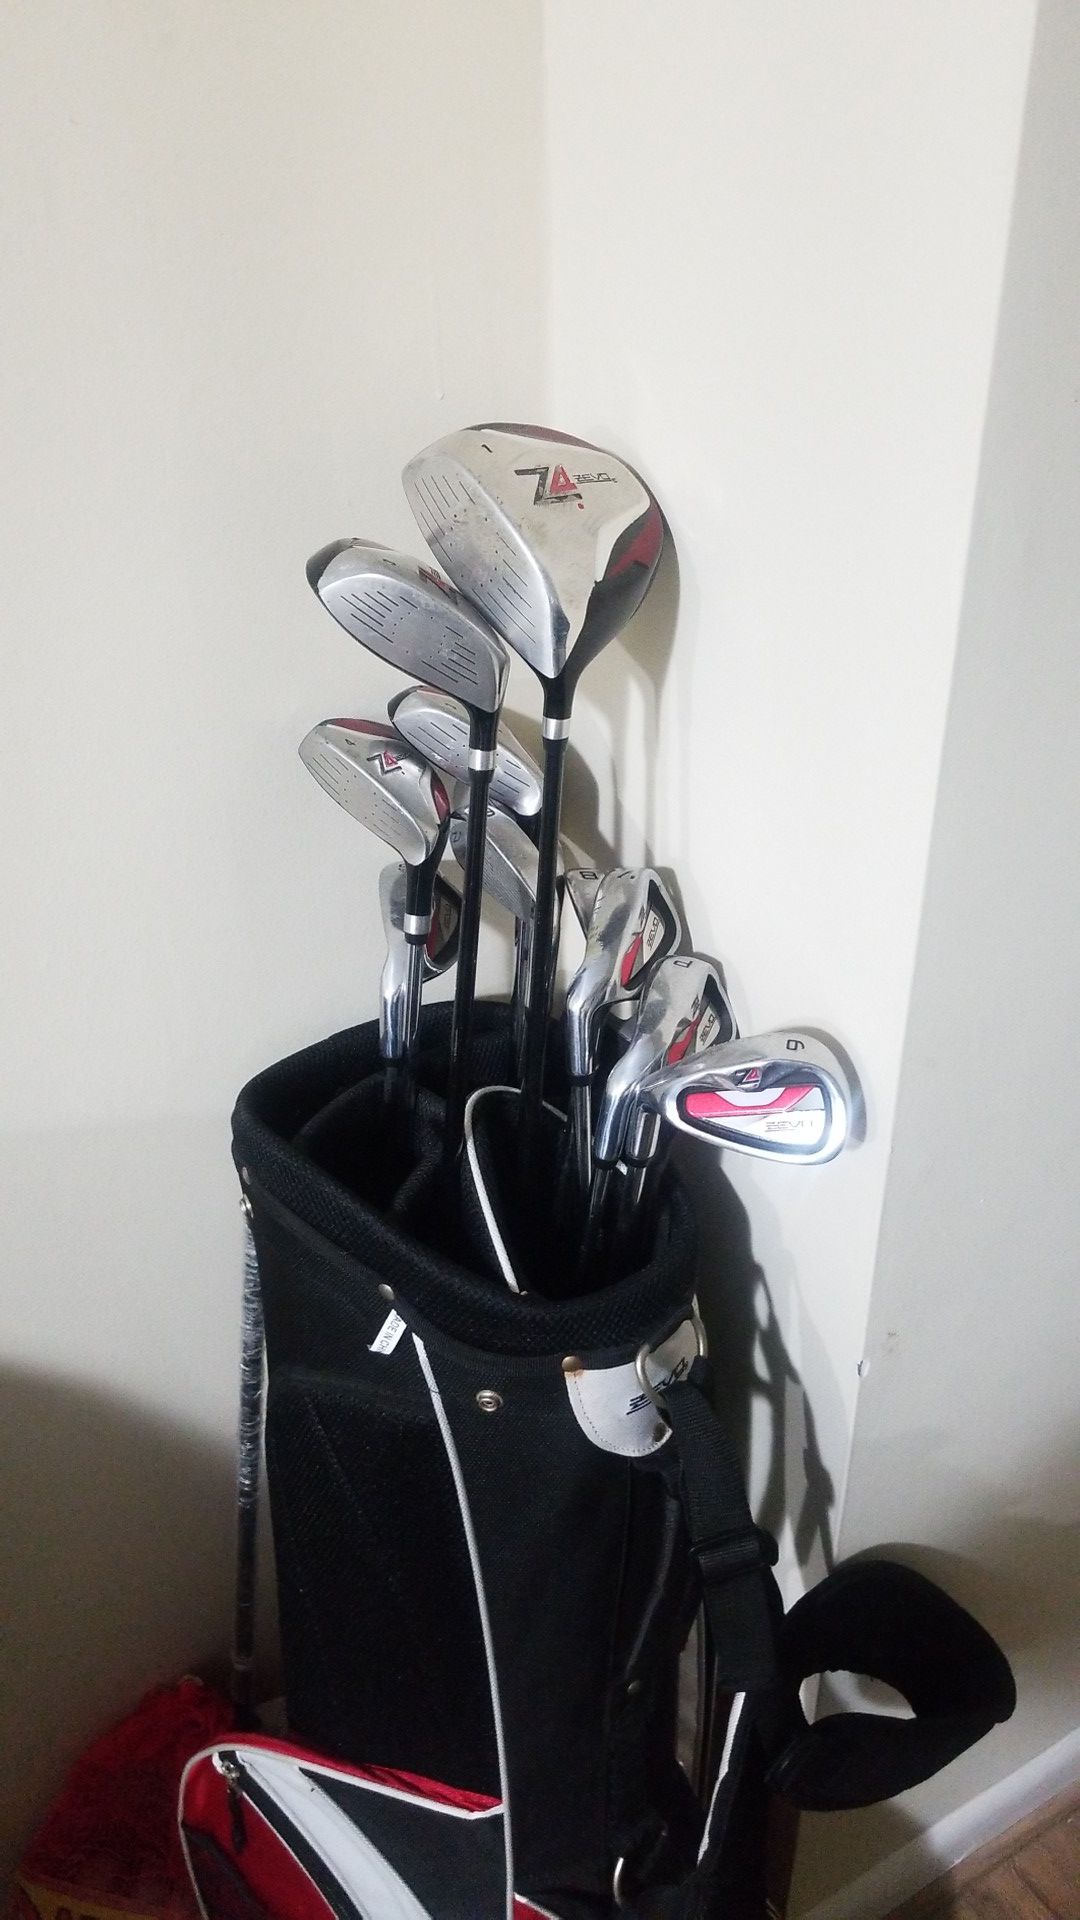 Golf Clubs and Bag of Golf Balls